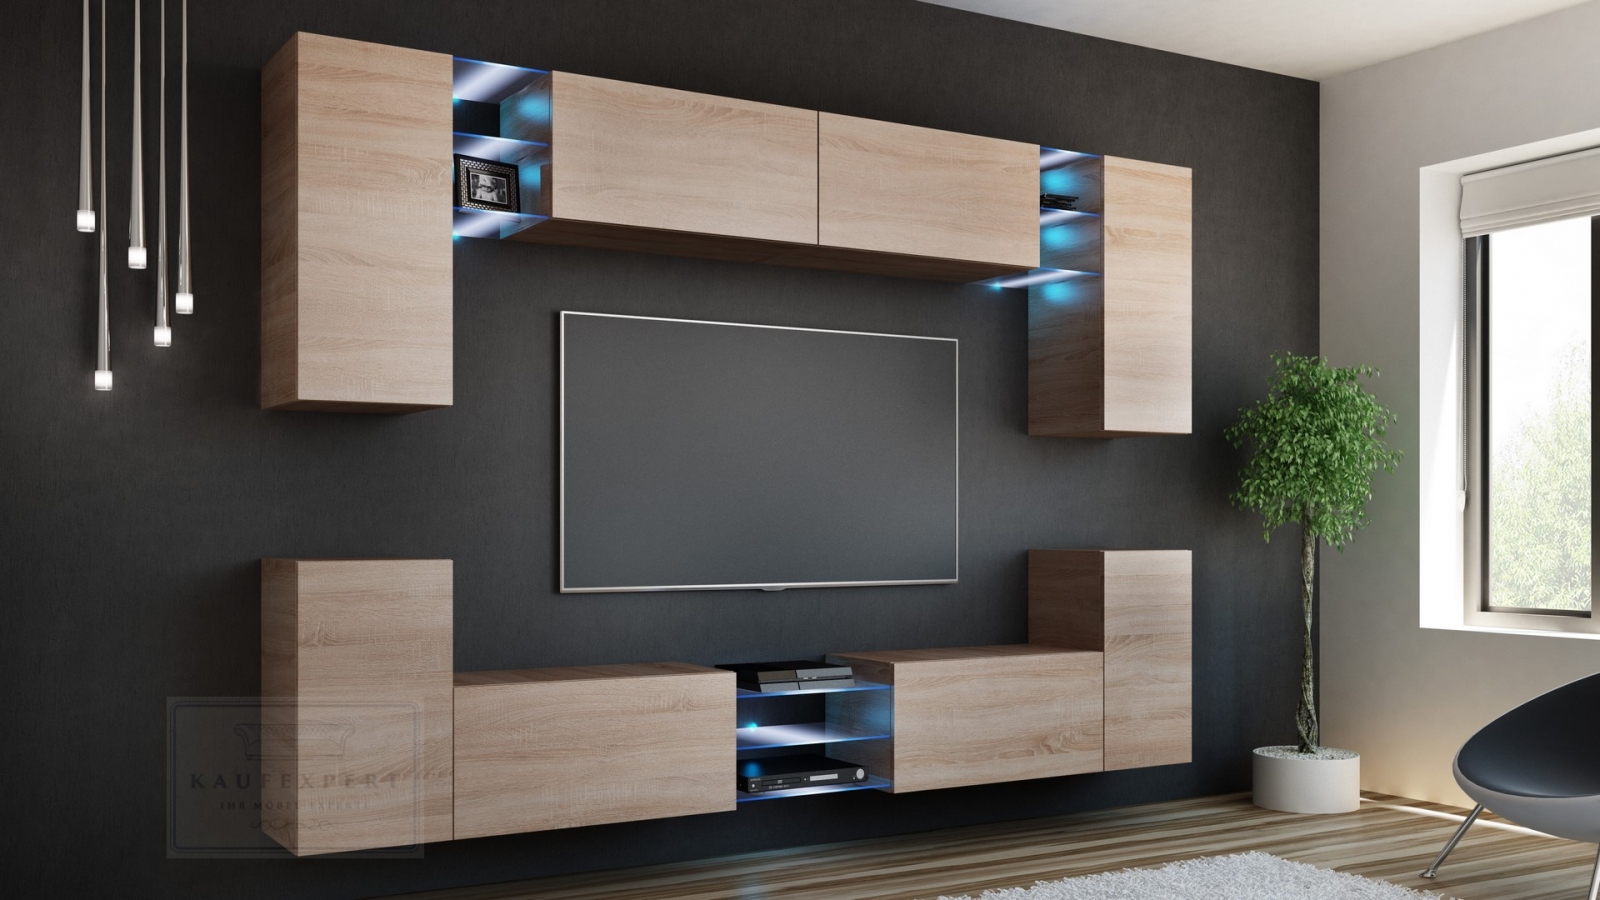 Wohnwand Galaxy Sonoma Eiche Mediawand Medienwand Design Modern Led Beleuchtung Hängewand Hängeschrank TV Wand